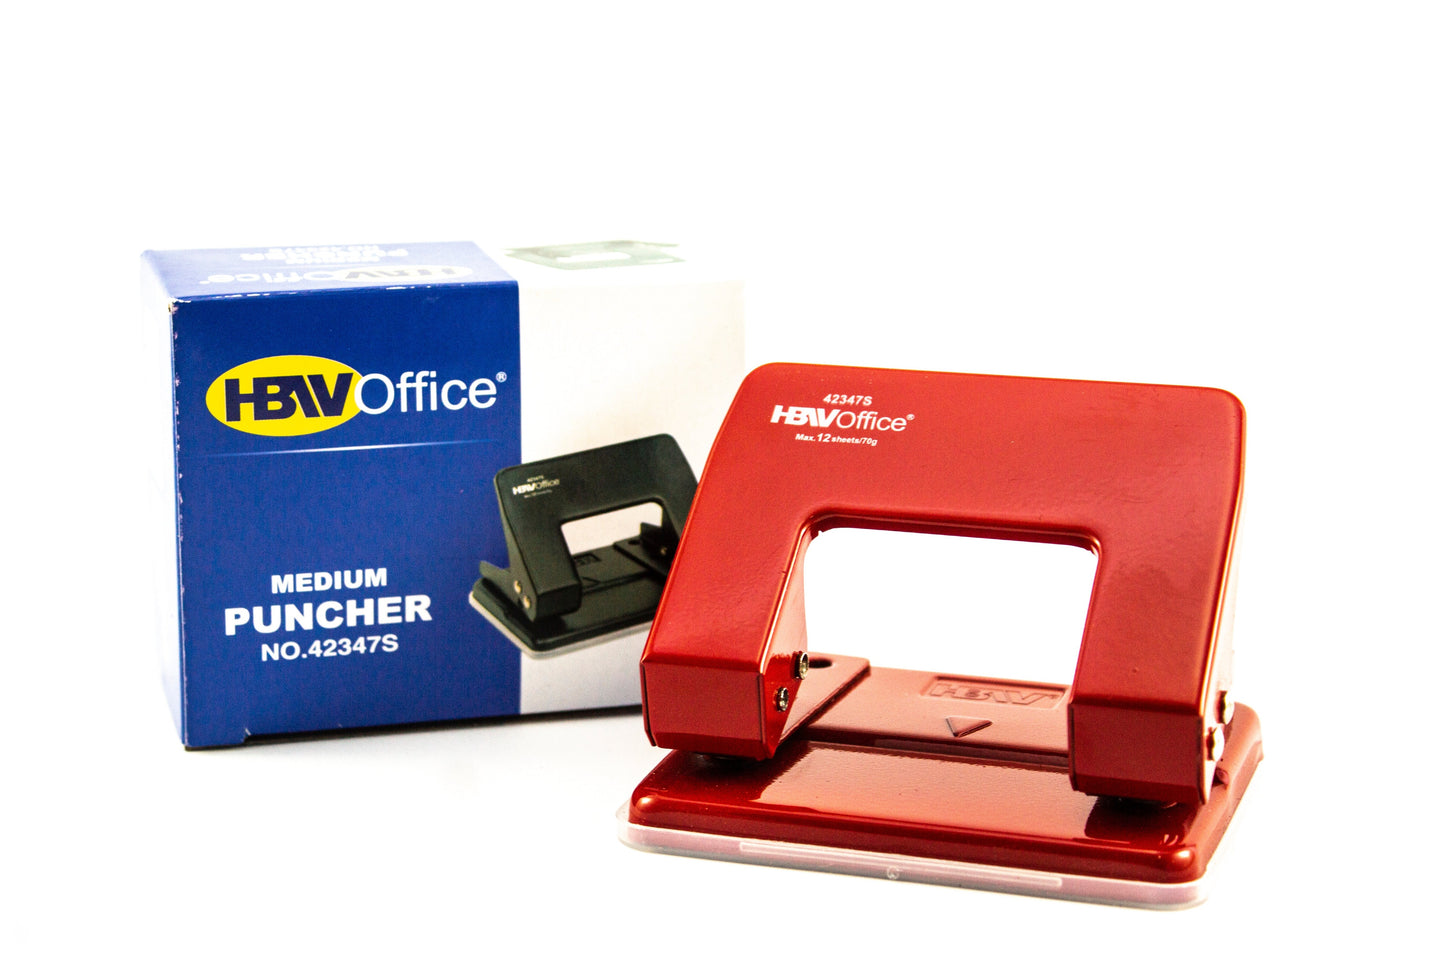 HBW Office Mini Puncher No. 42347S